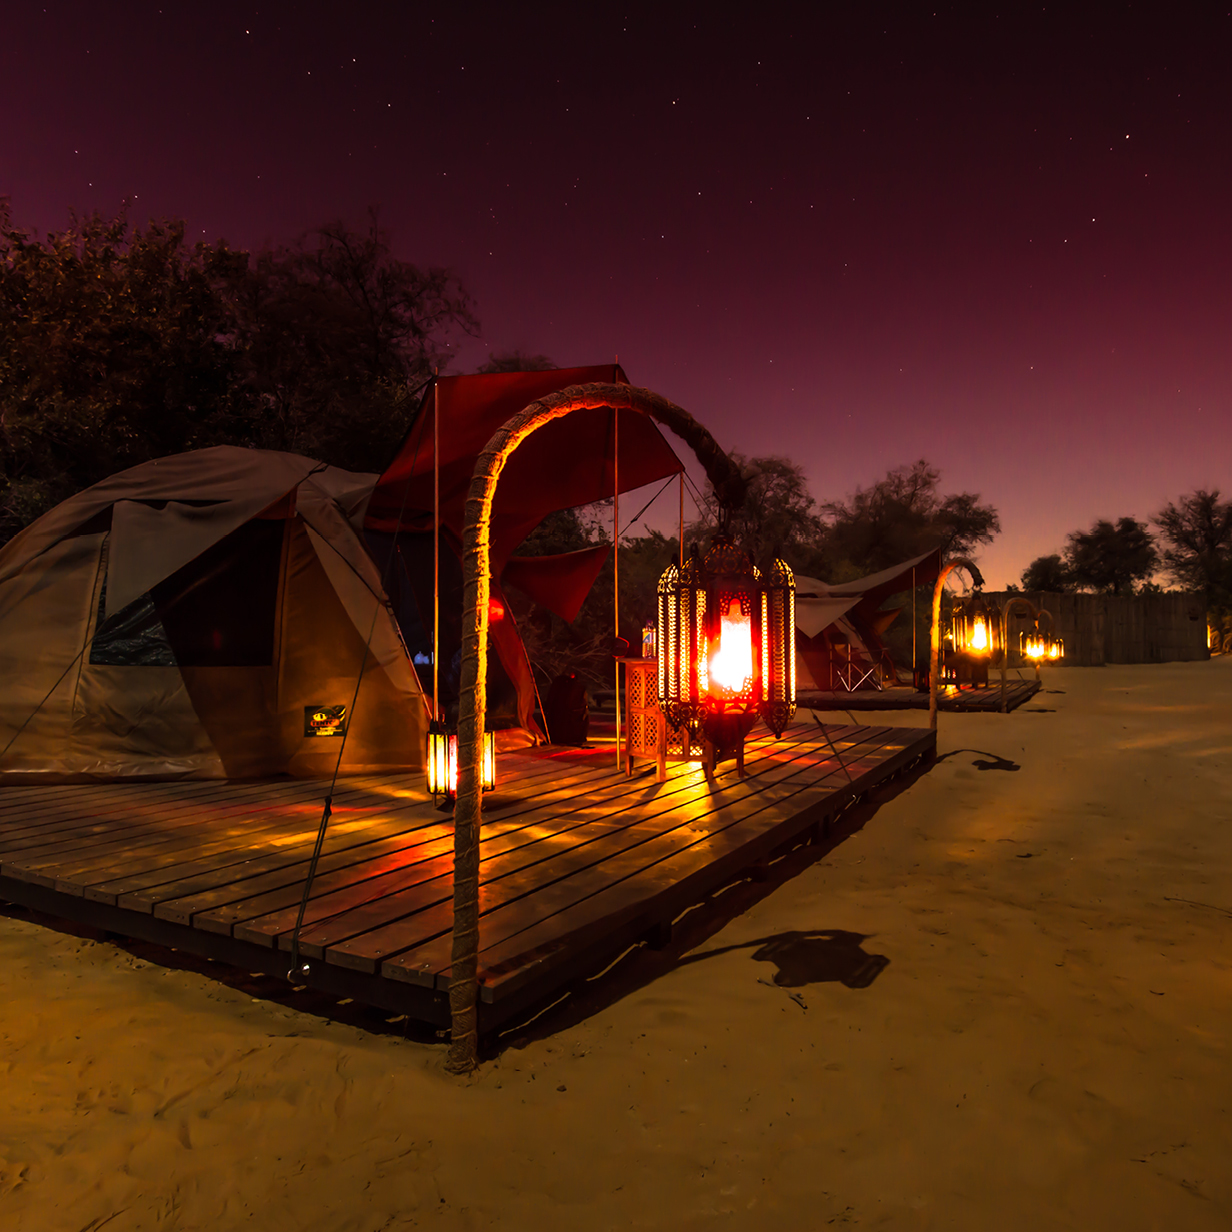 desert safari dubai overnight stay